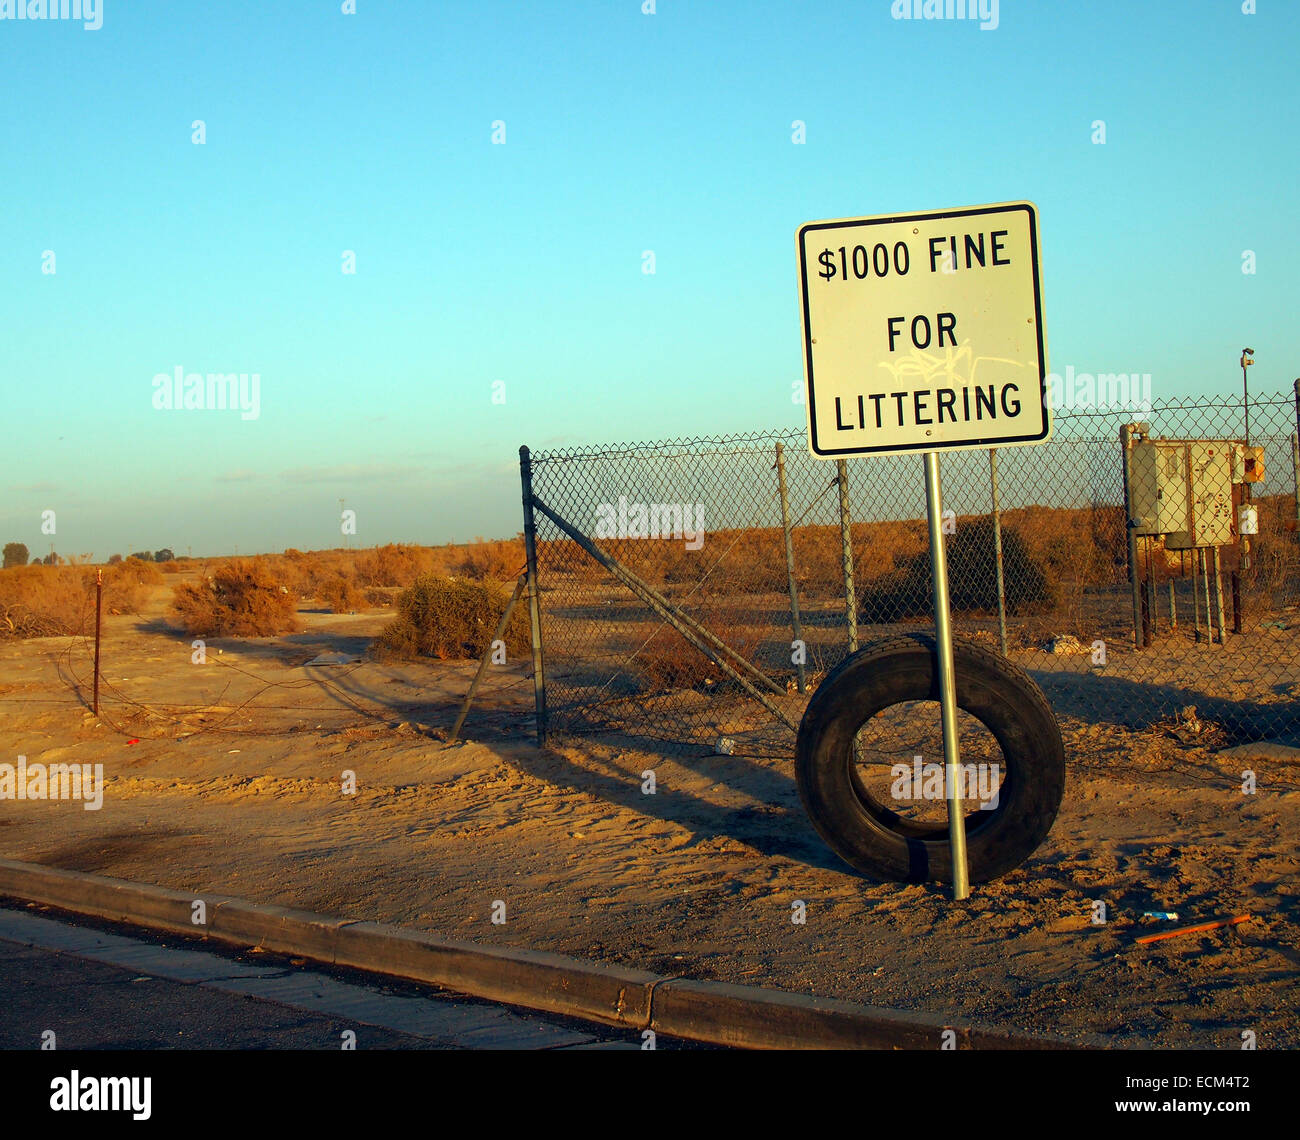 $1000 fine for littering sign, San Joaquin Valley, California Stock Photo